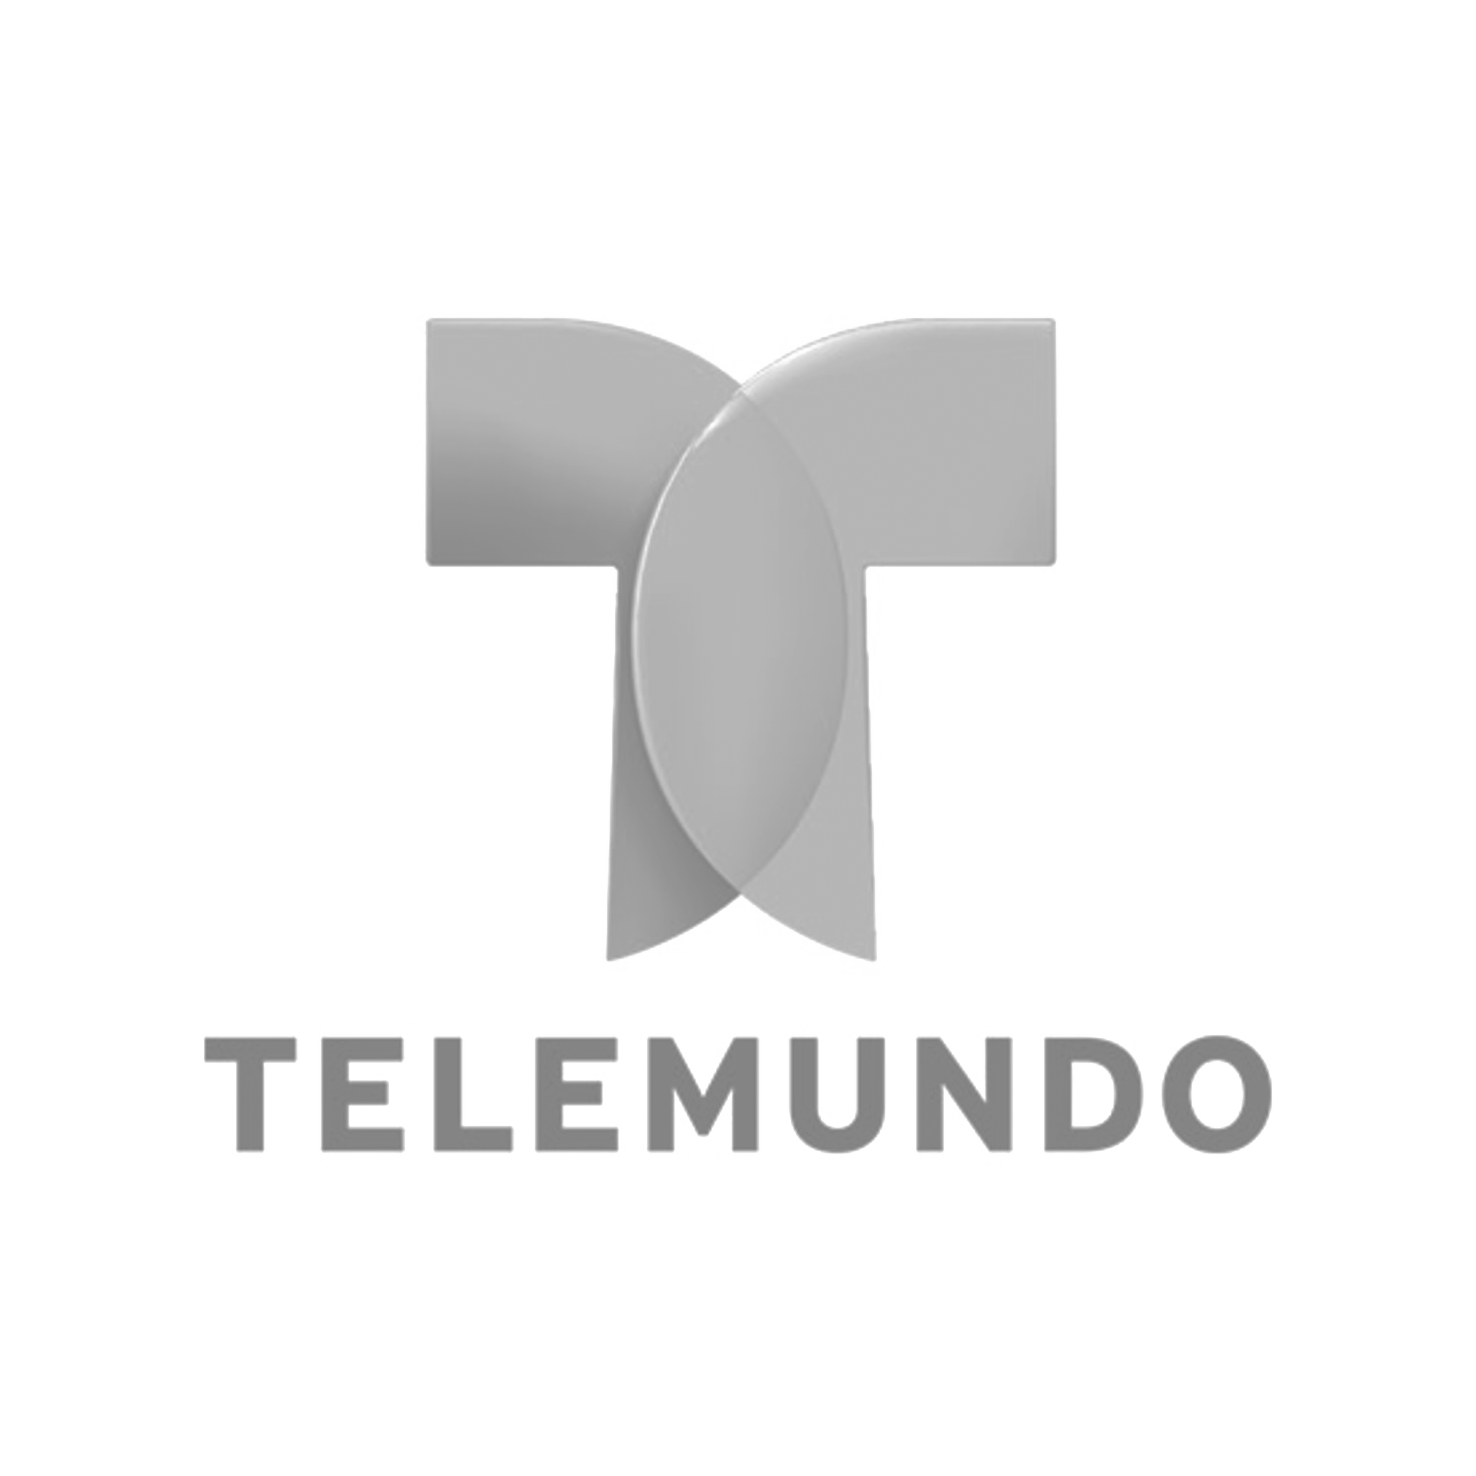 telemundo-logojpg.png